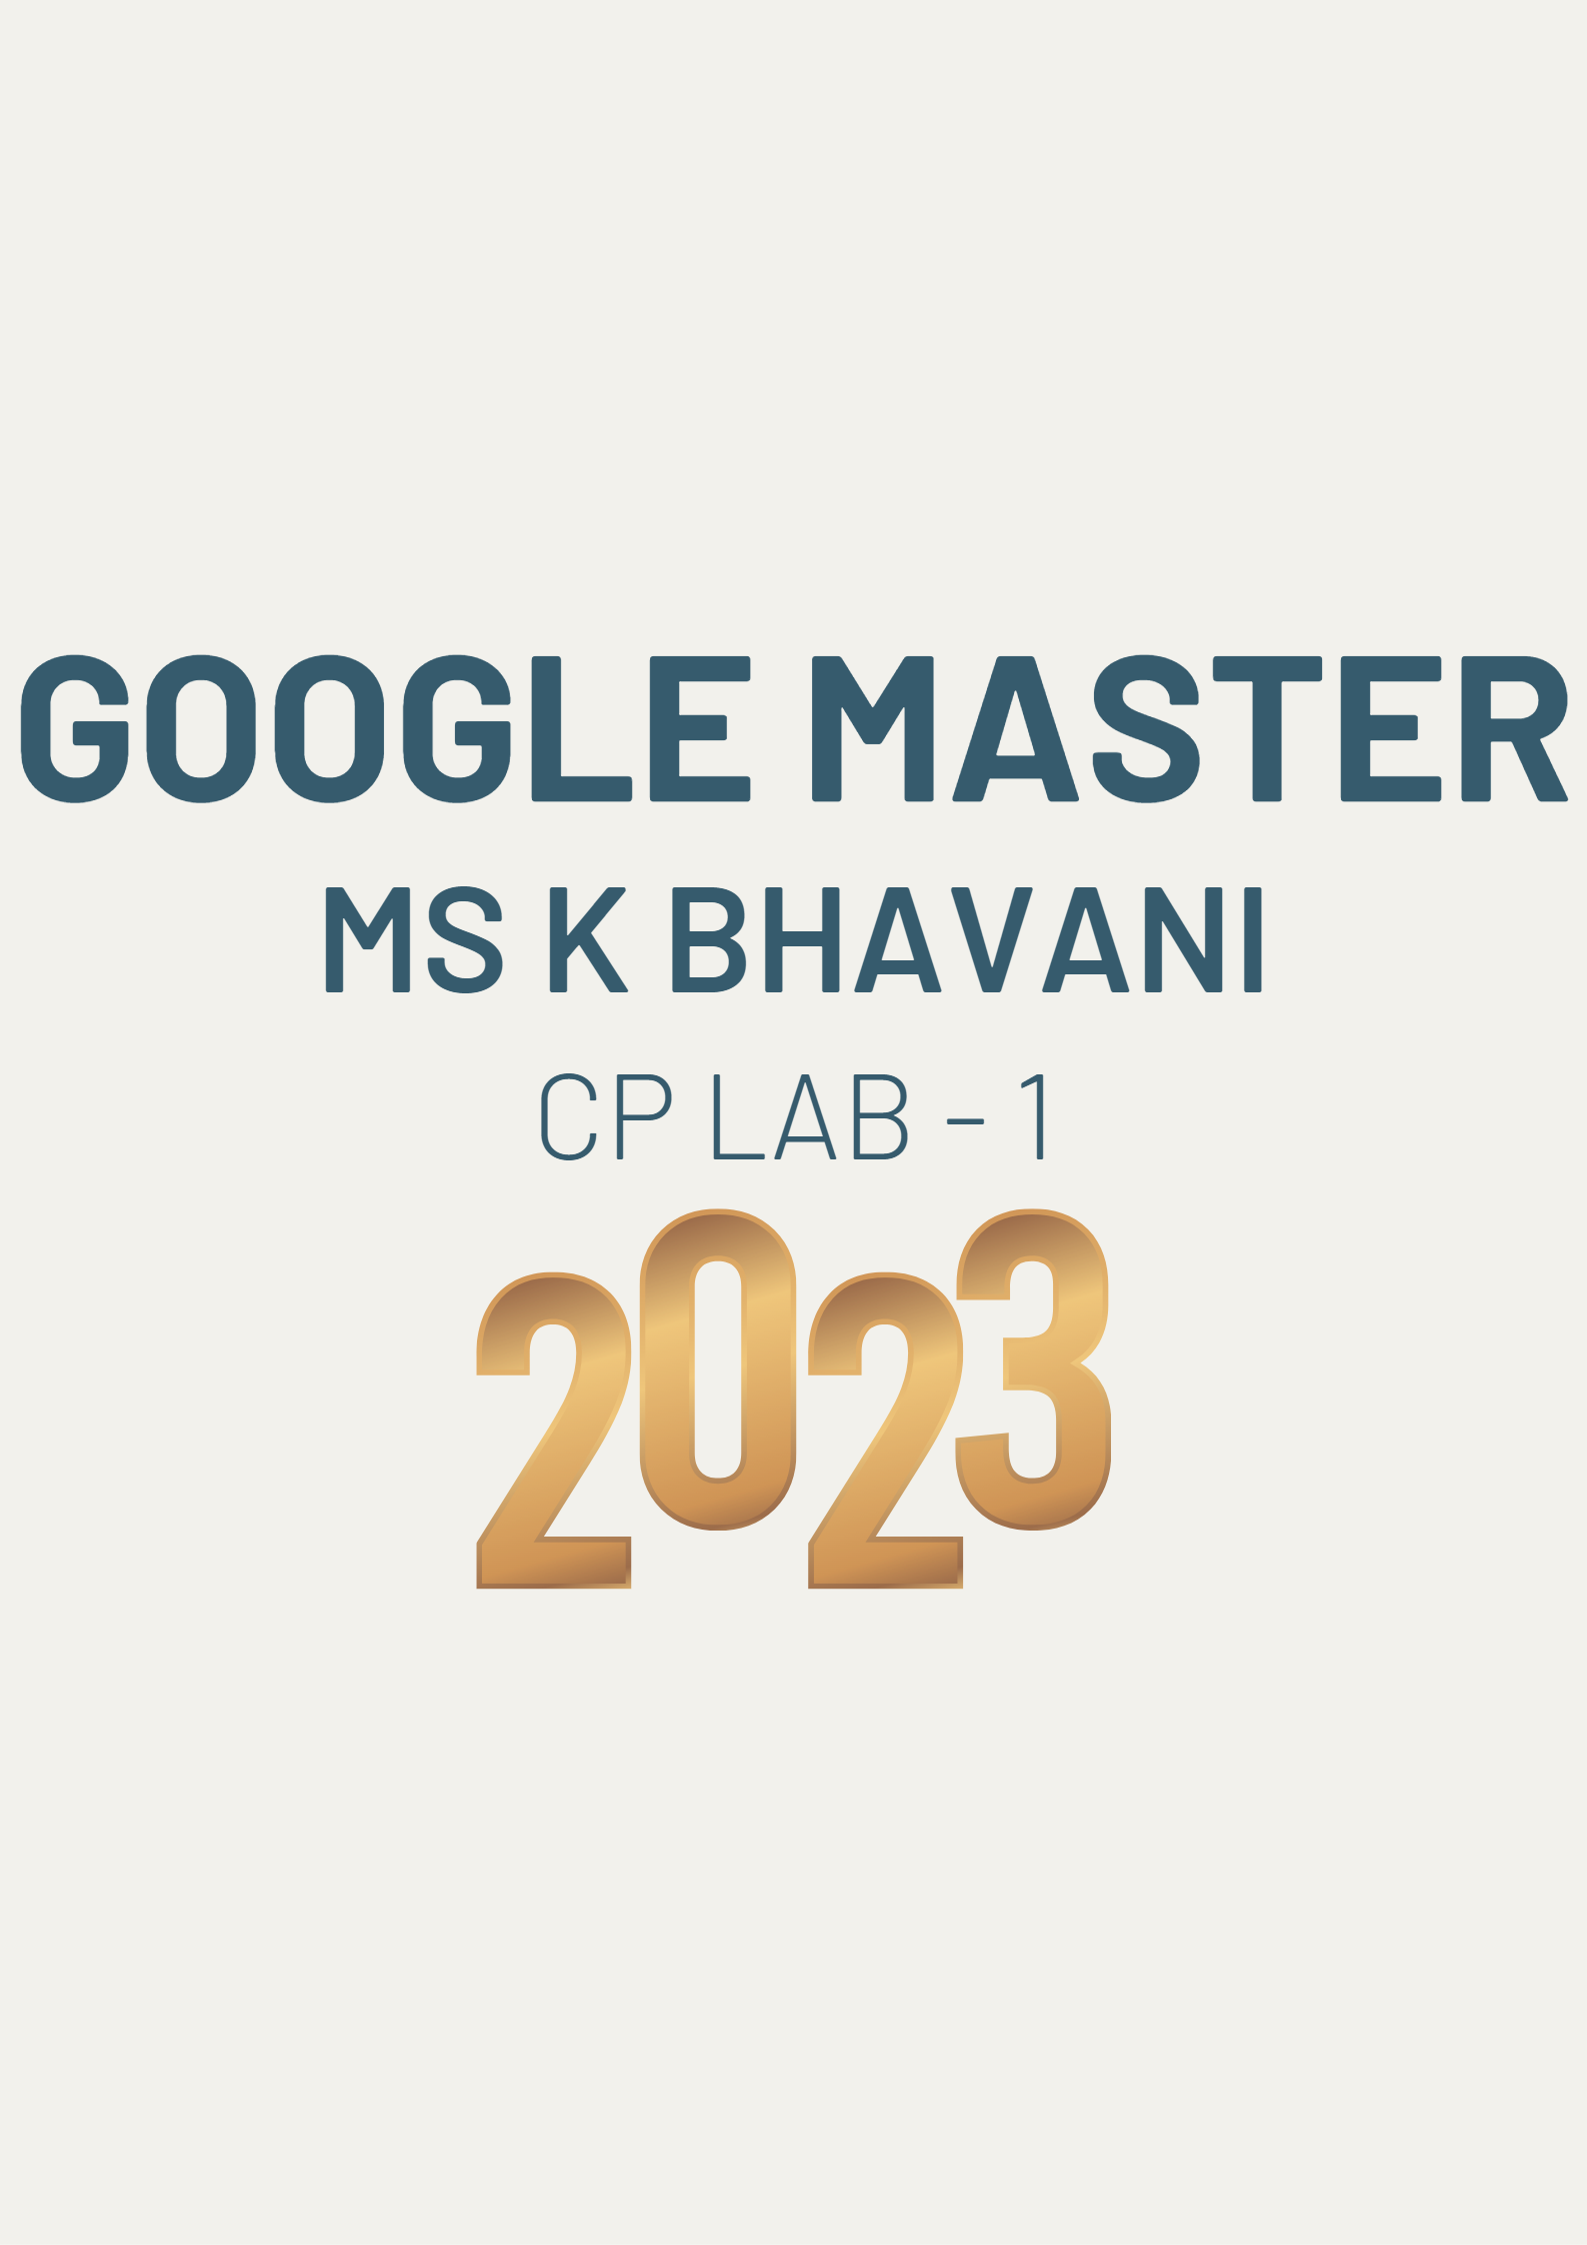 GoogleMaster